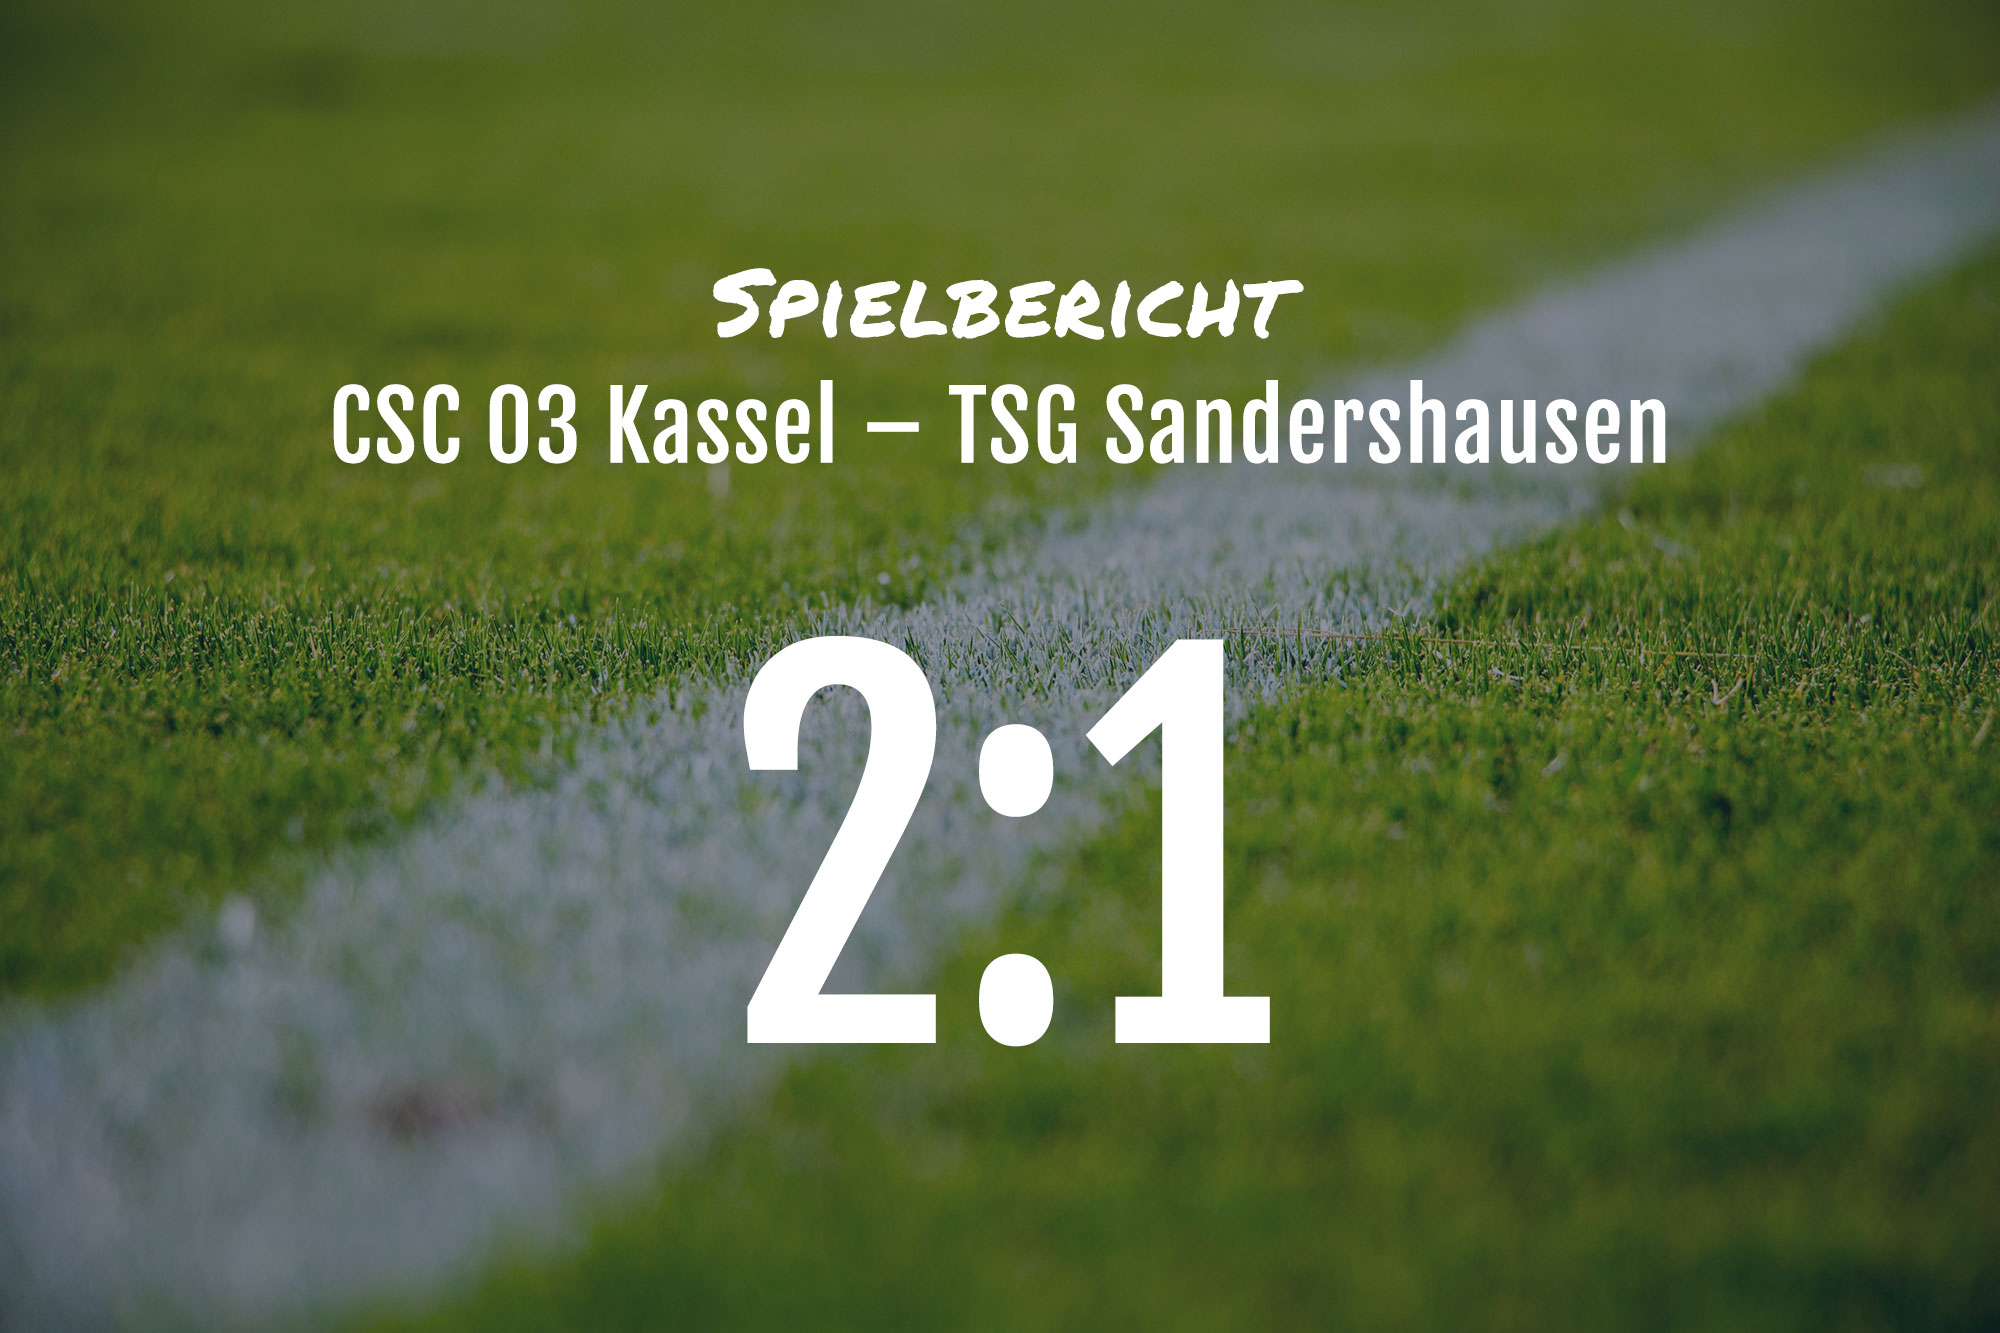 Spielbericht: CSC 03 Kassel – TSG Sandershausen 2:1